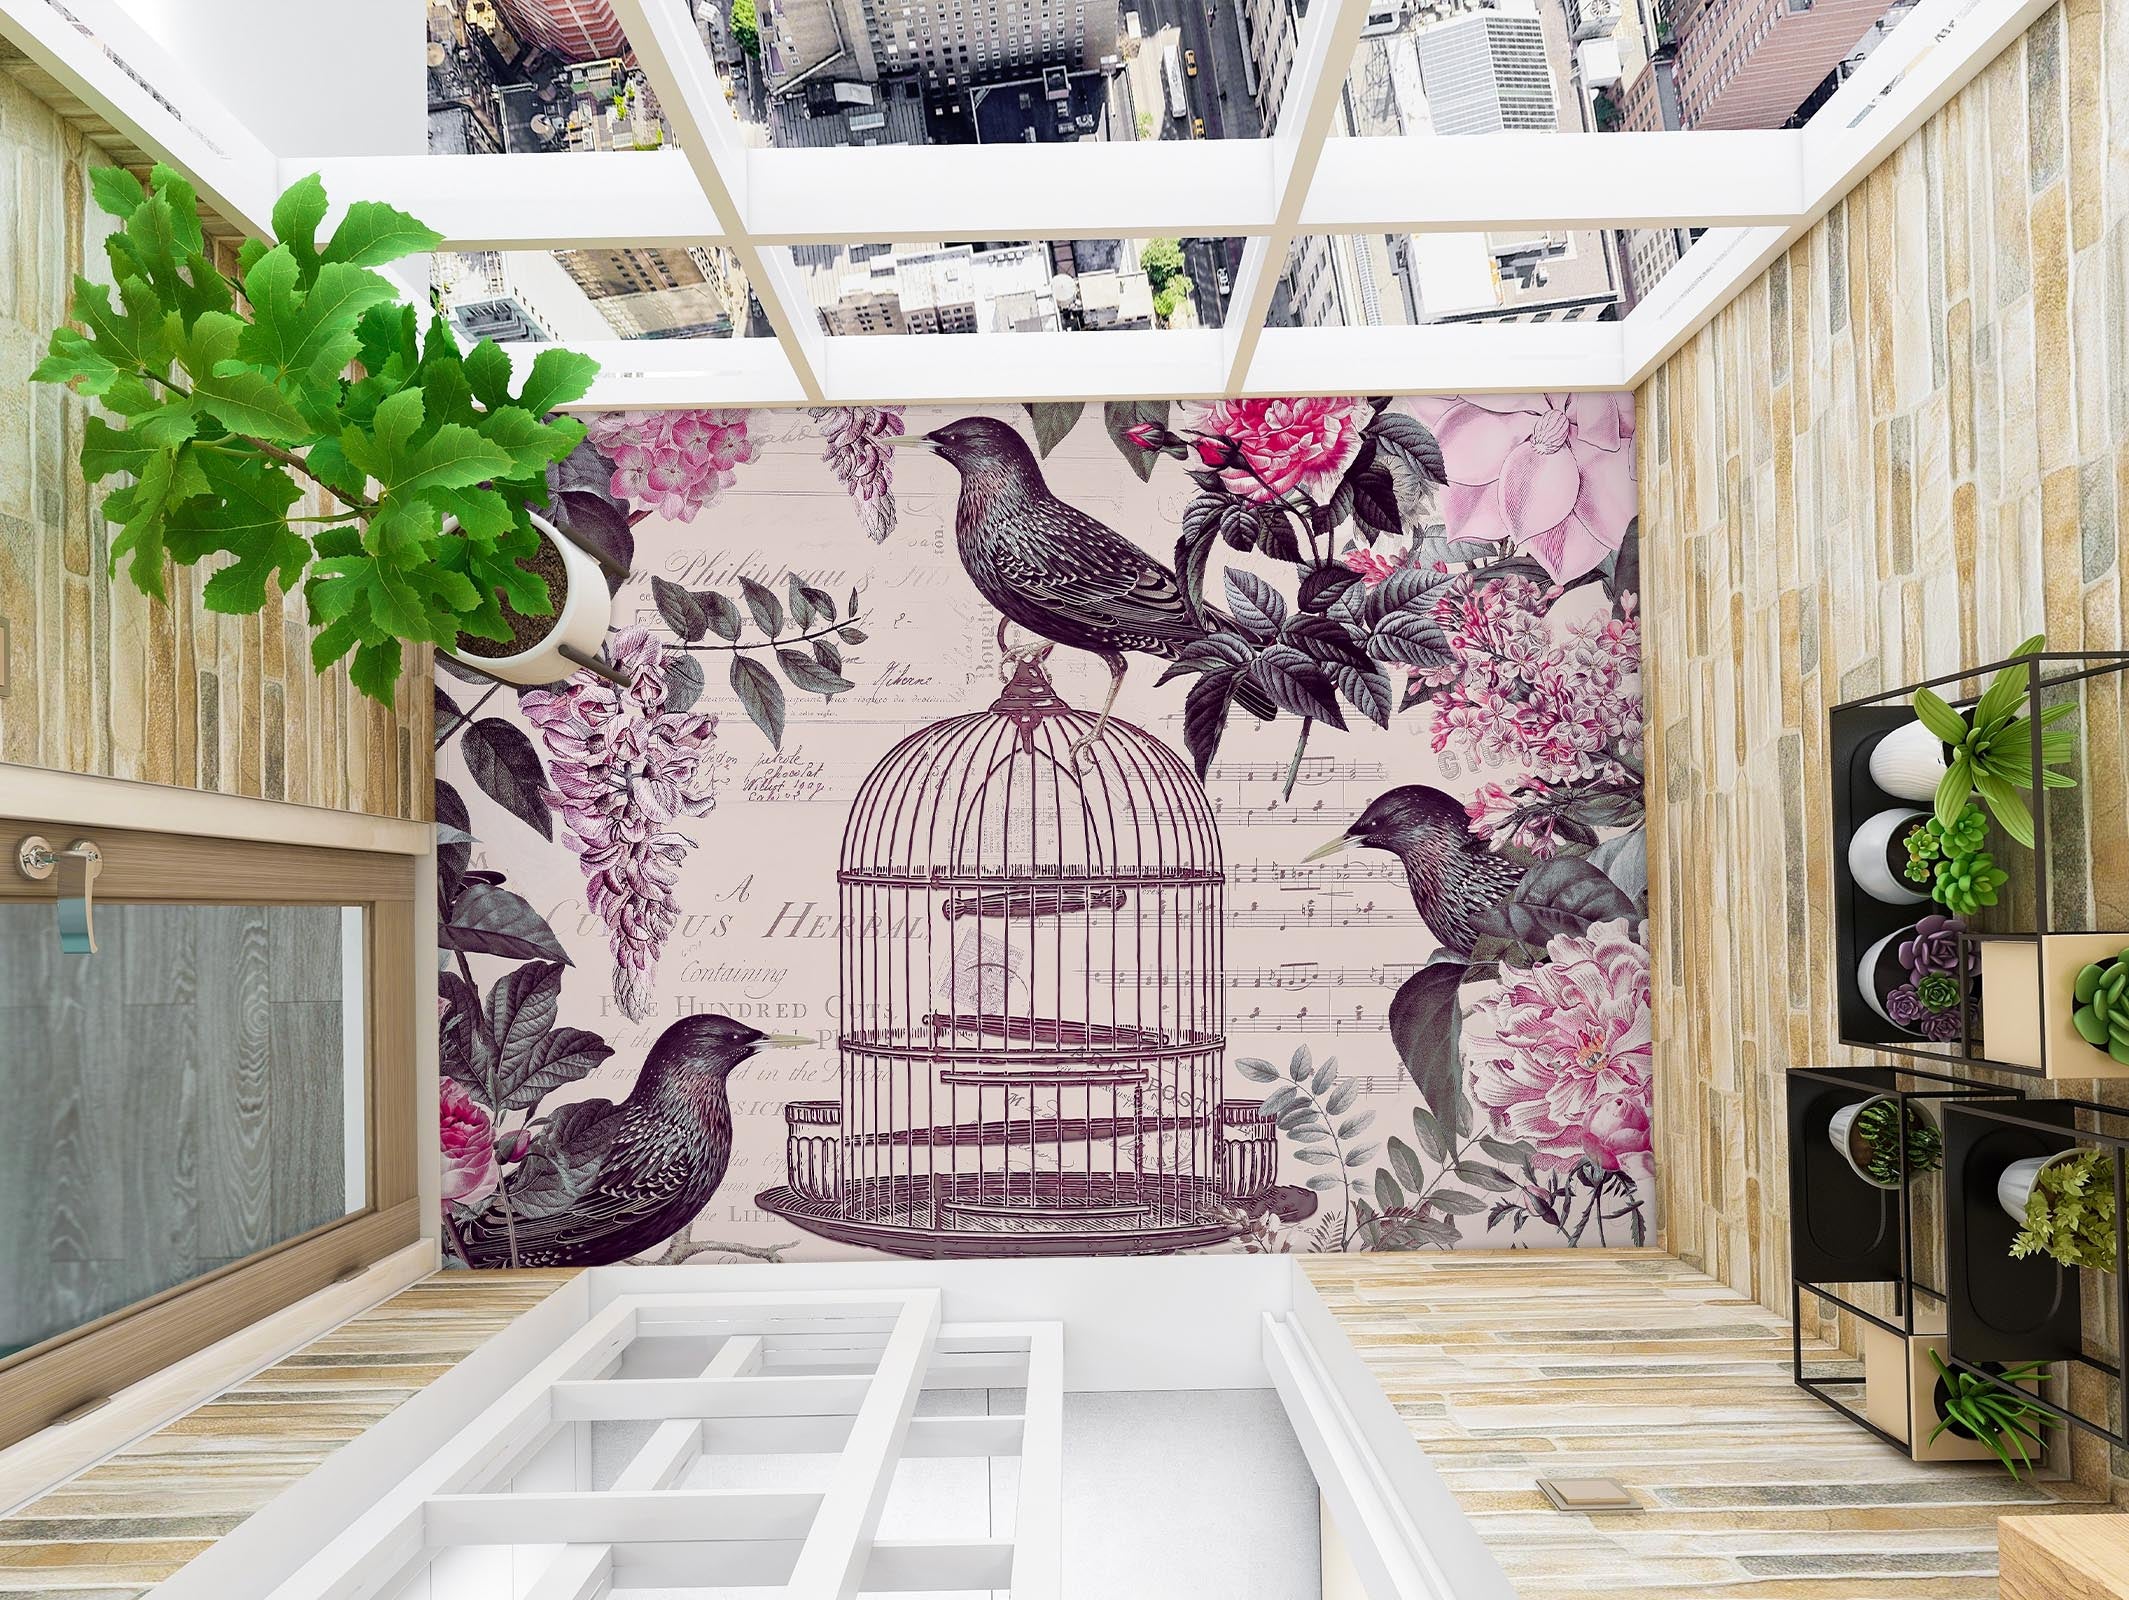 3D Birdcage Pink Flower Bush 140134 Andrea Haase Floor Mural  Wallpaper Murals Self-Adhesive Removable Print Epoxy